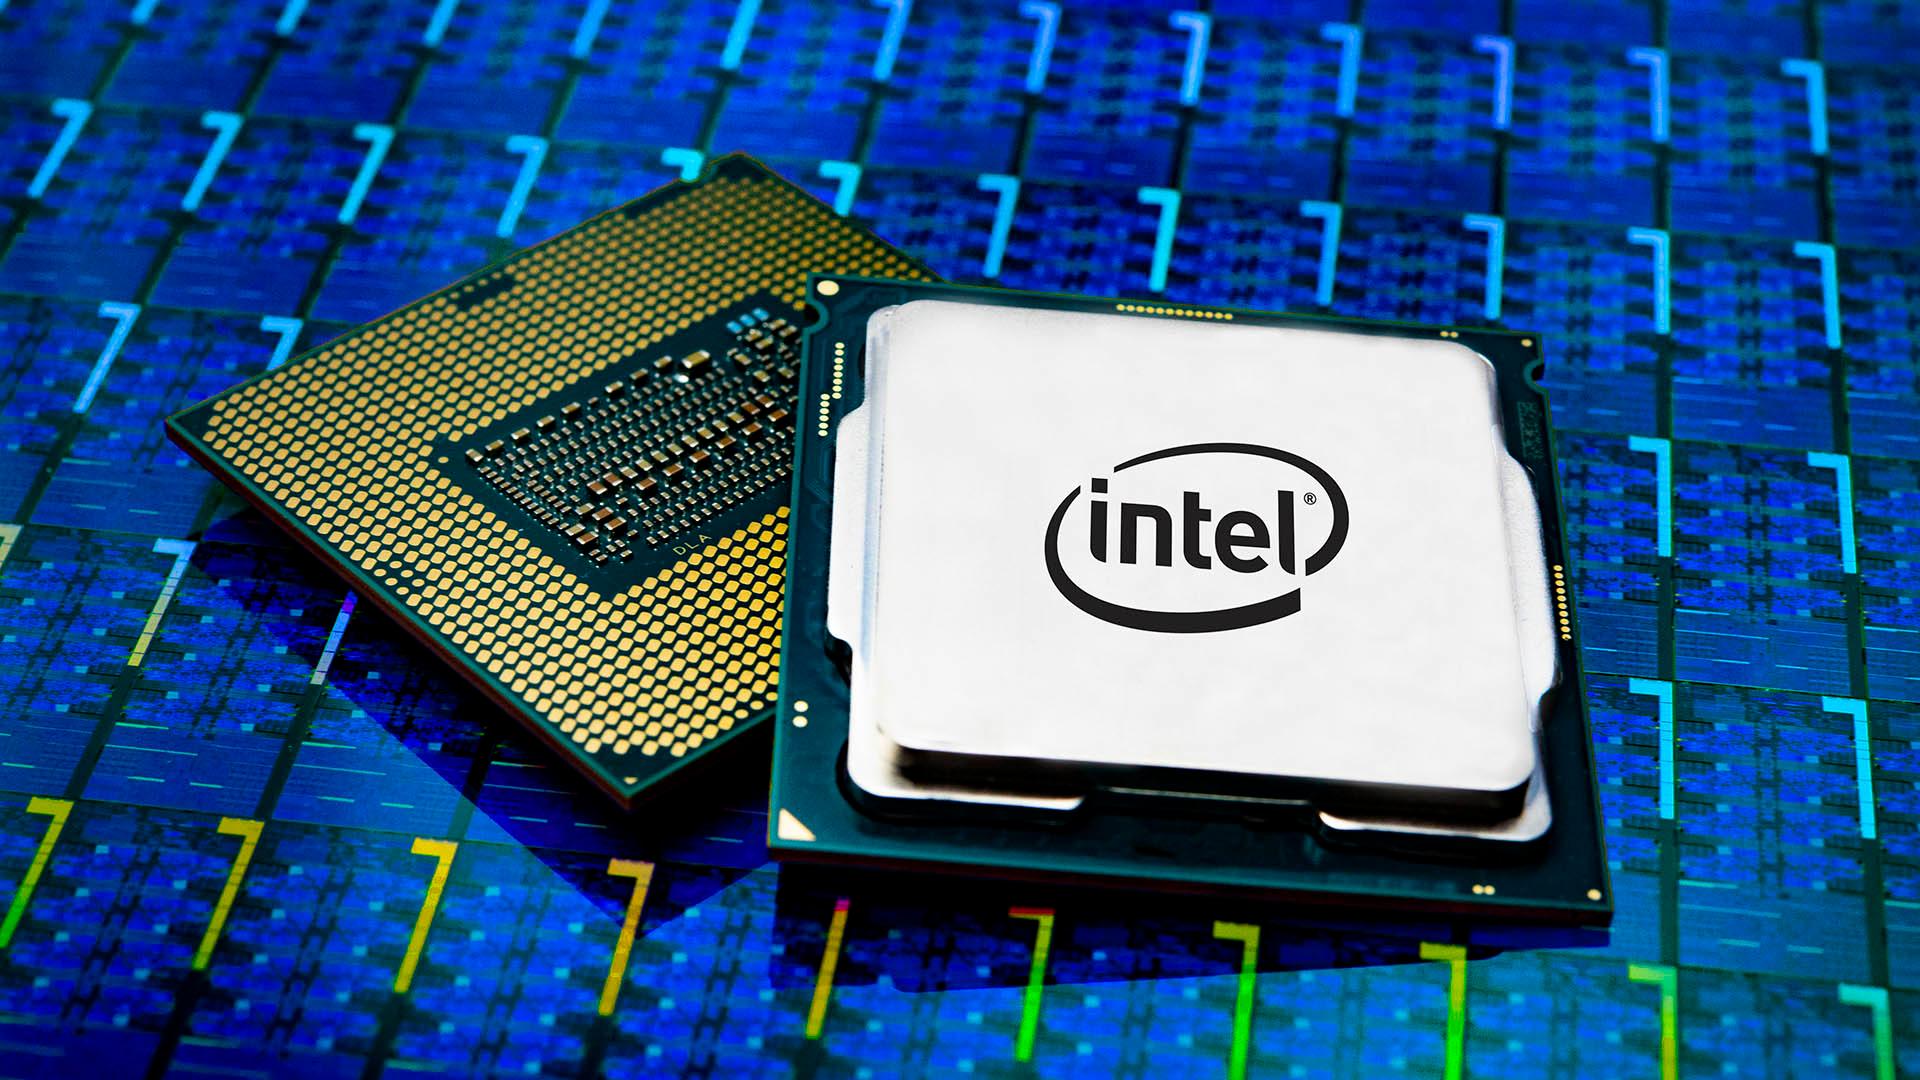 Intel će isporučivati proizvode Huaweiju - Avaz